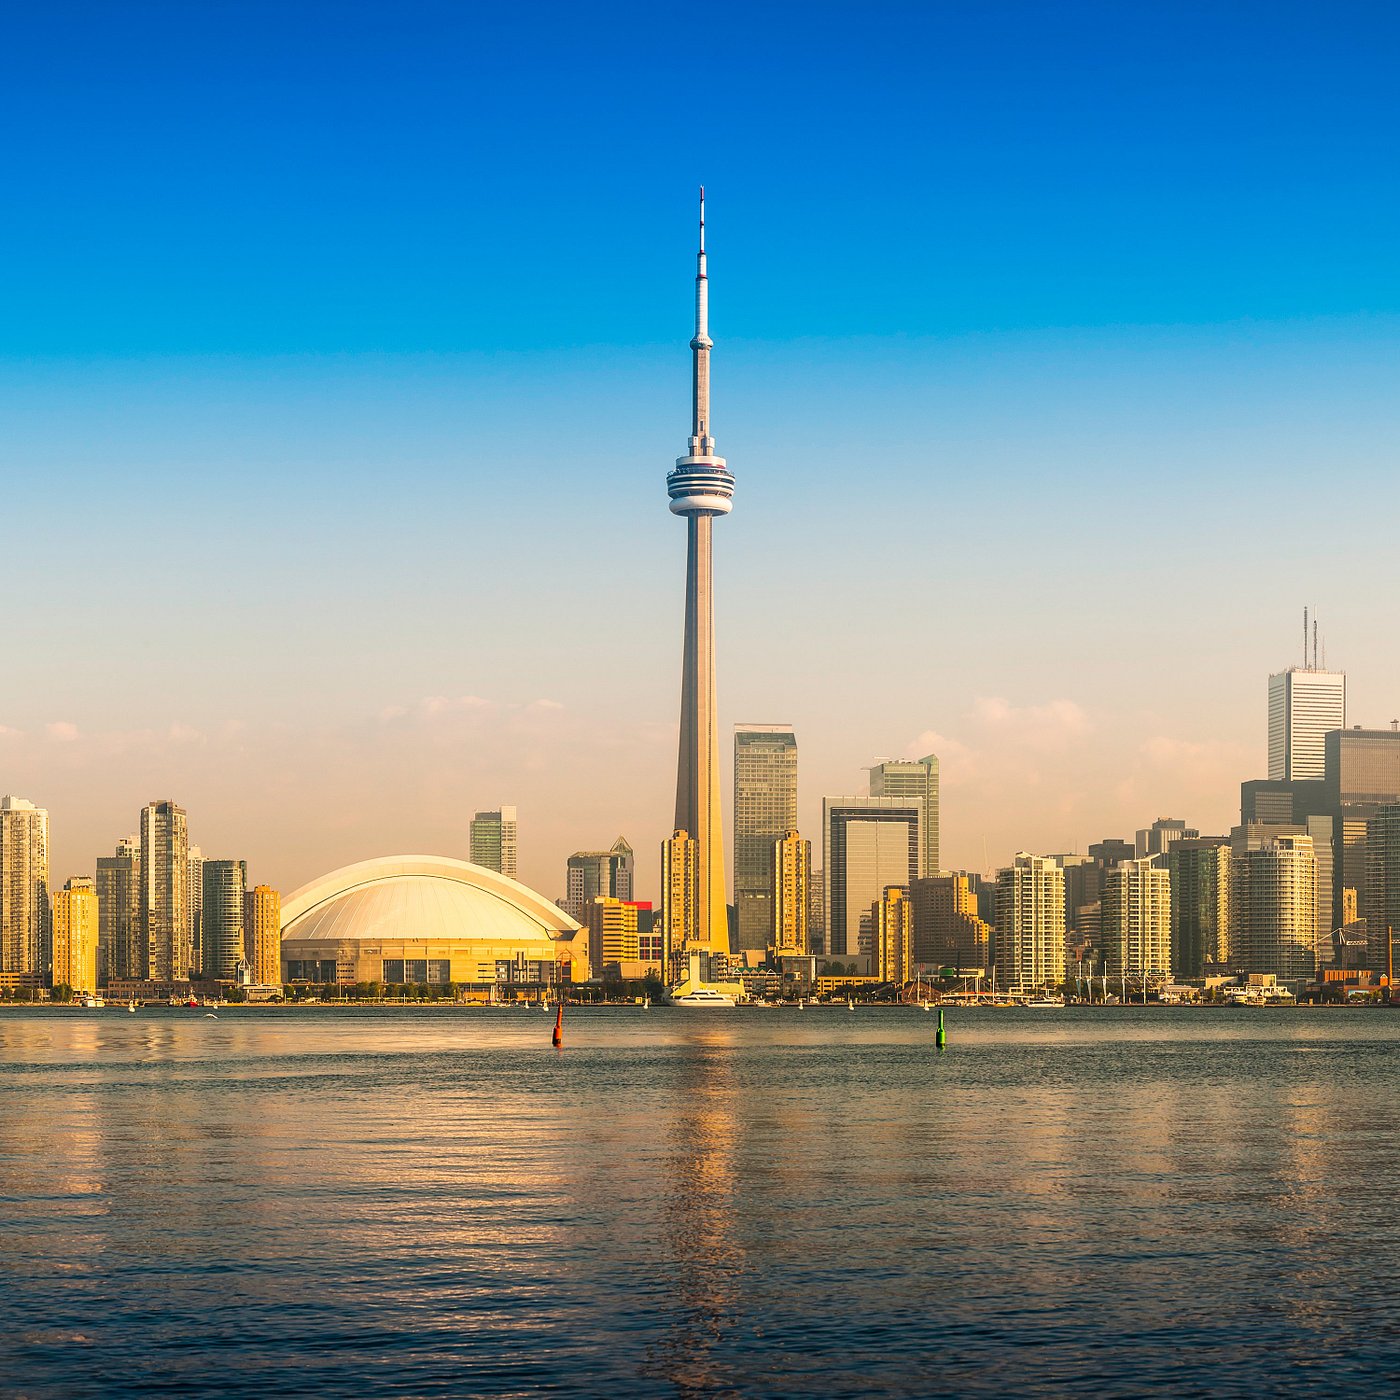 this is the Toronto skyline, my city!